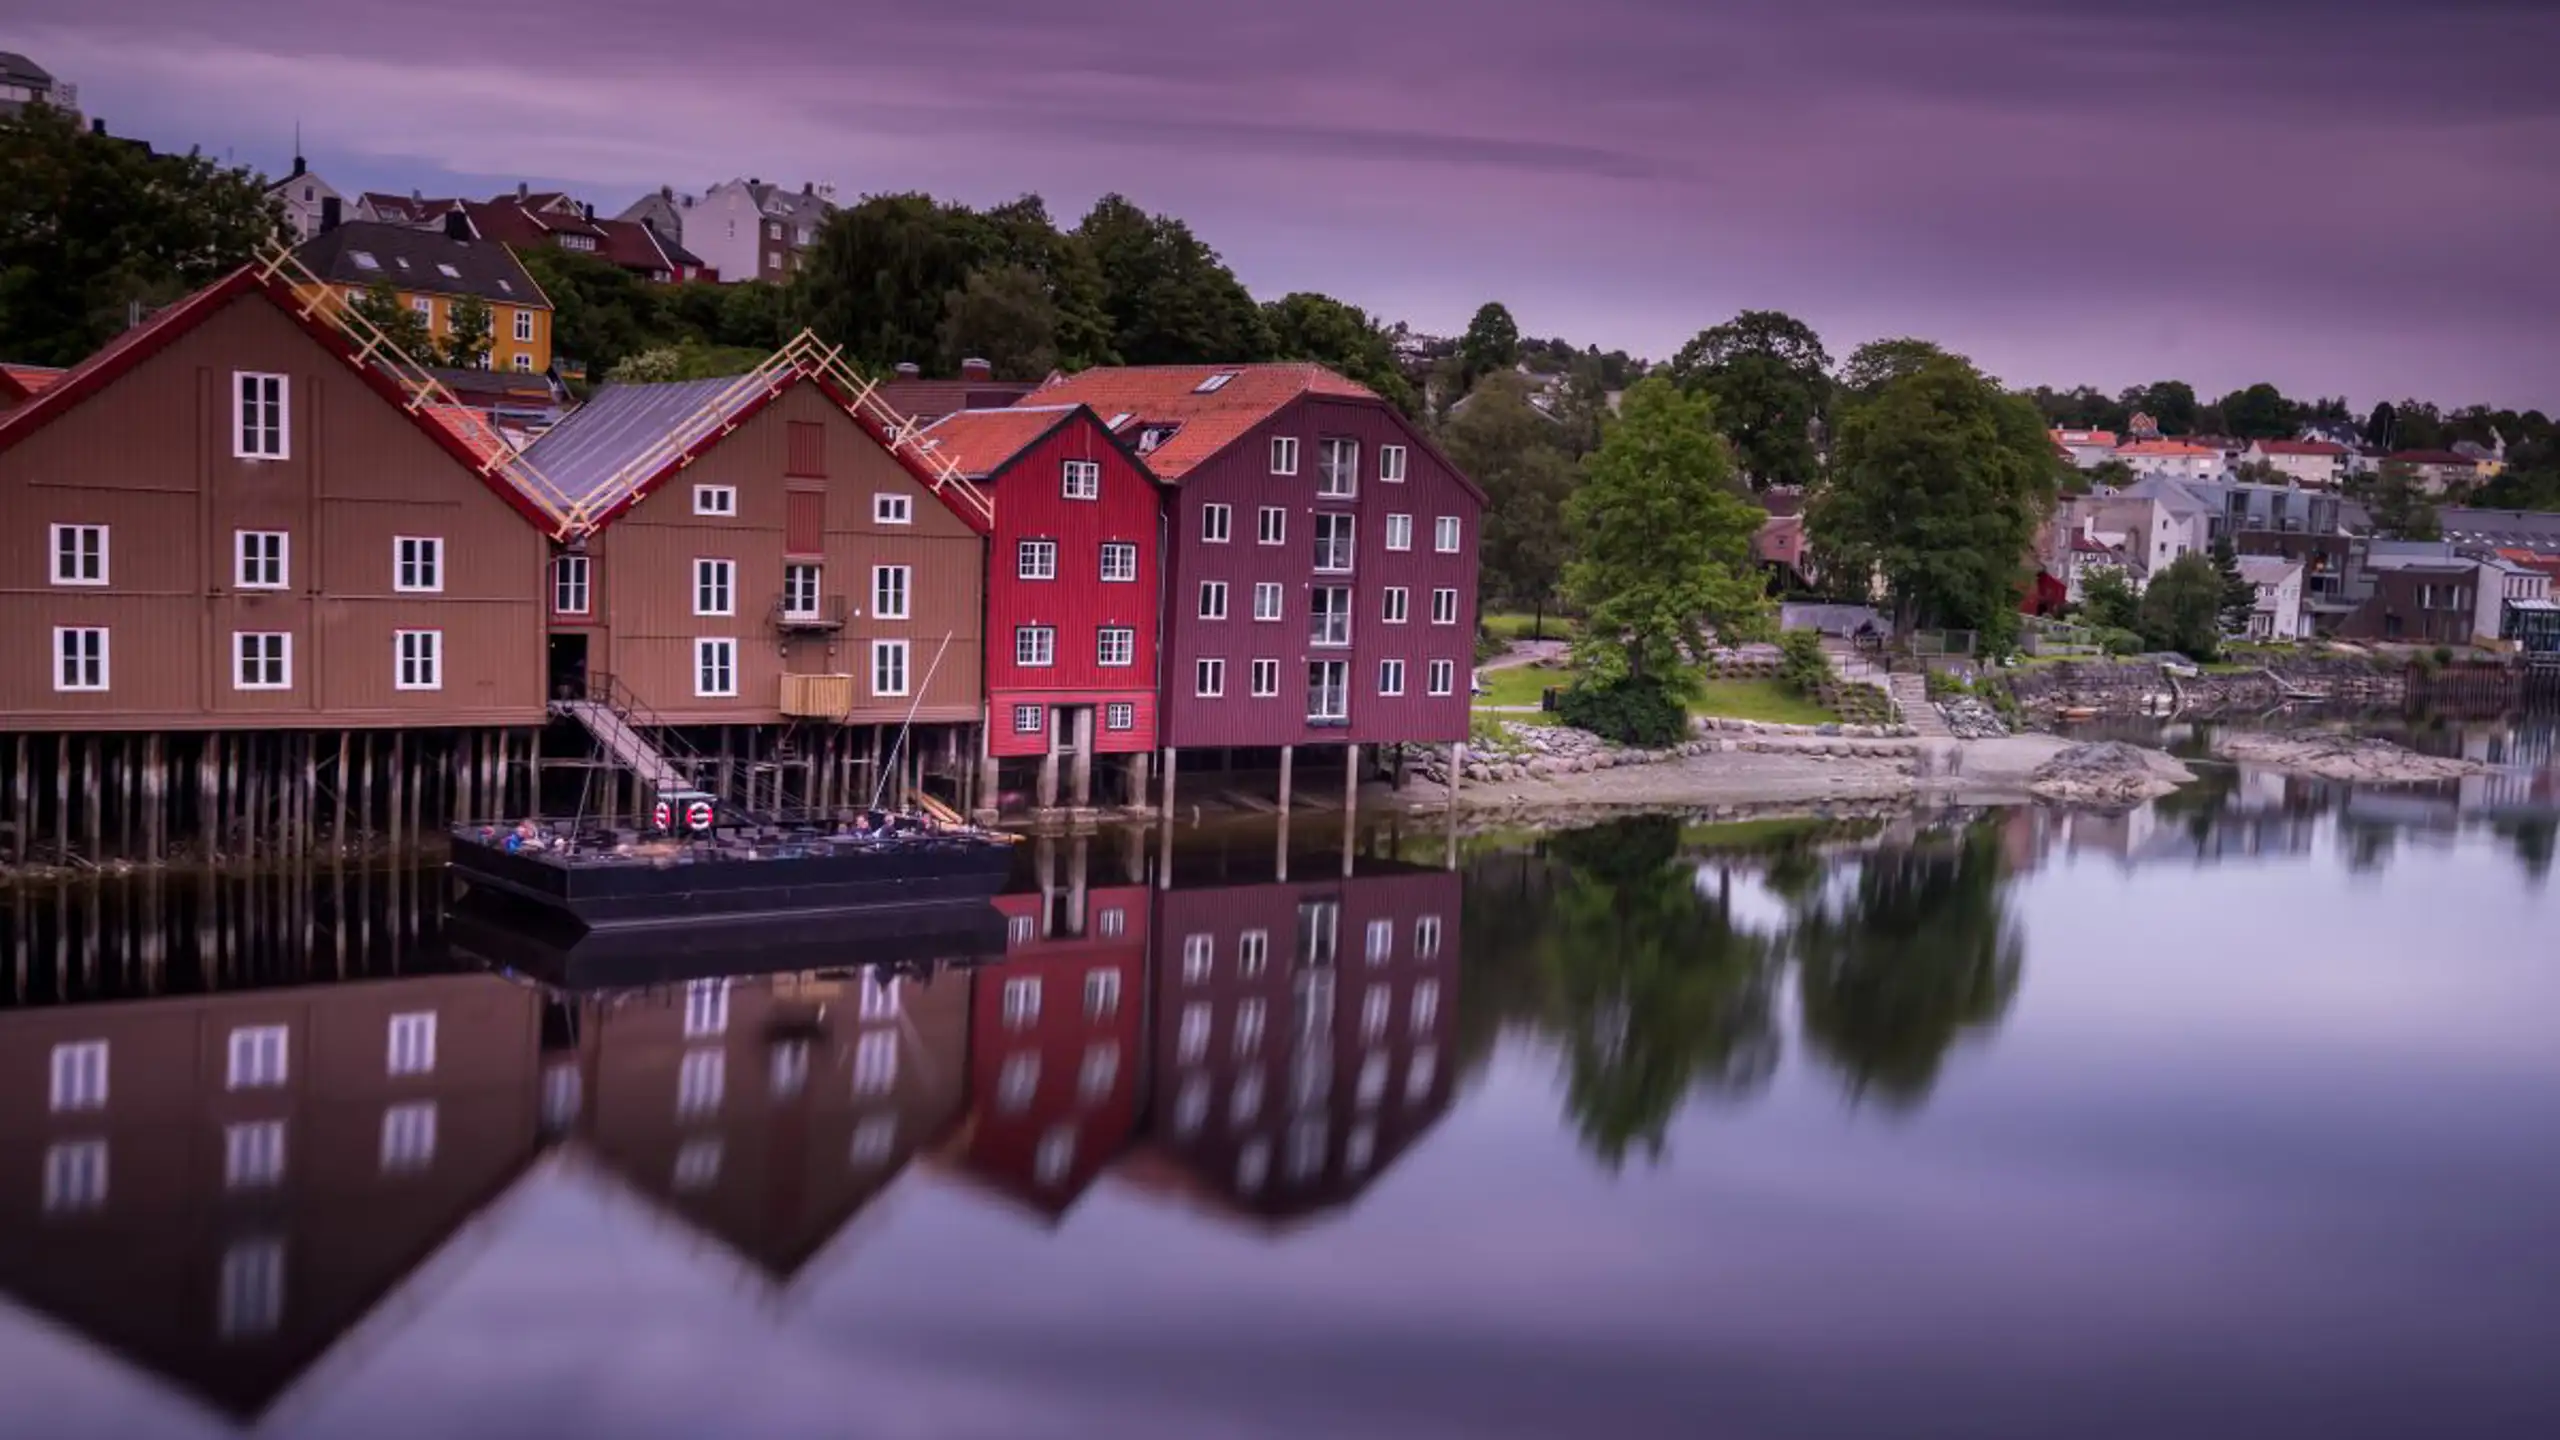 Trondheim City In Norway 2023 11 27 05 08 50 Utc